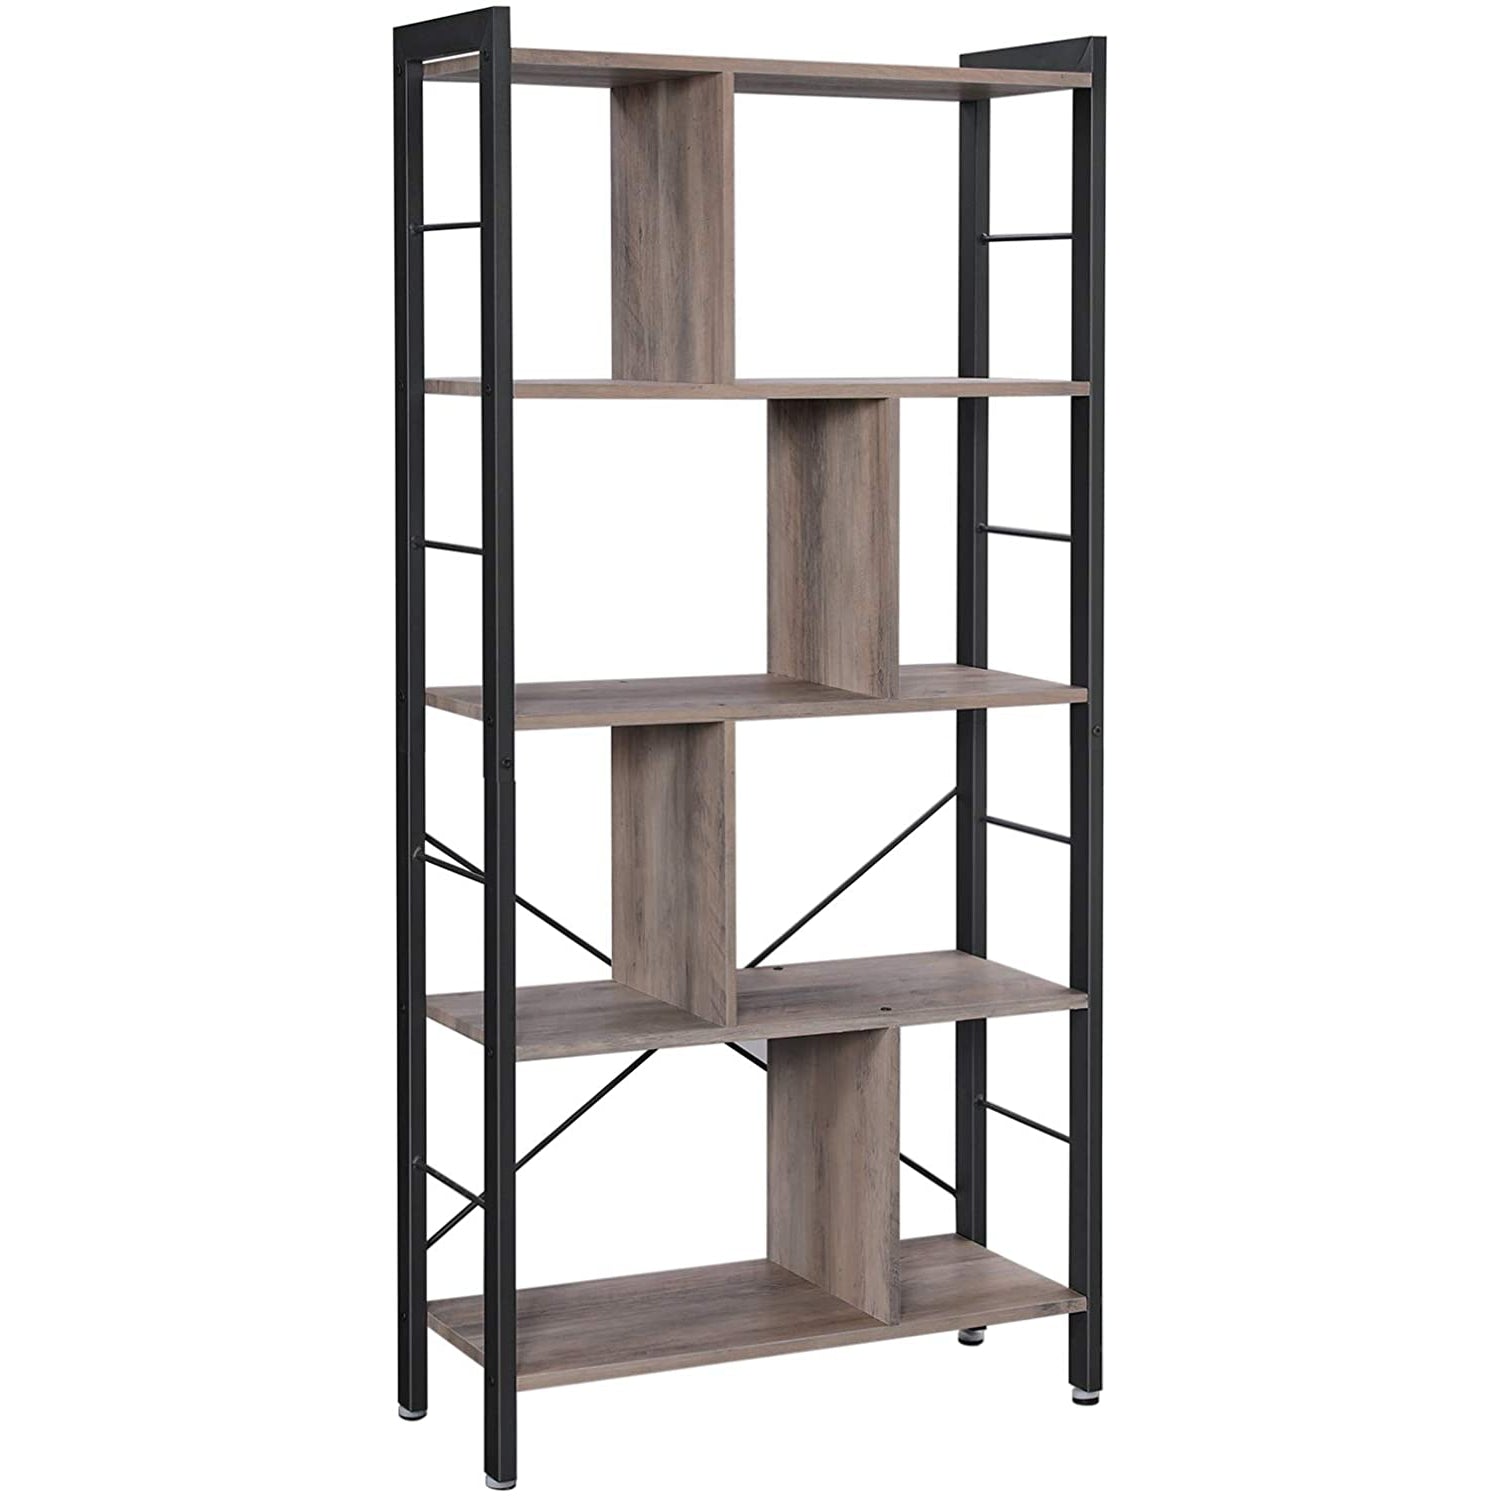 Nancy's Steve 2 Bookcase - Bookcases - Industrial - Wood - Iron Frame - Gray/Black - 74 x 30 x 154.5 cm (L x W x H)